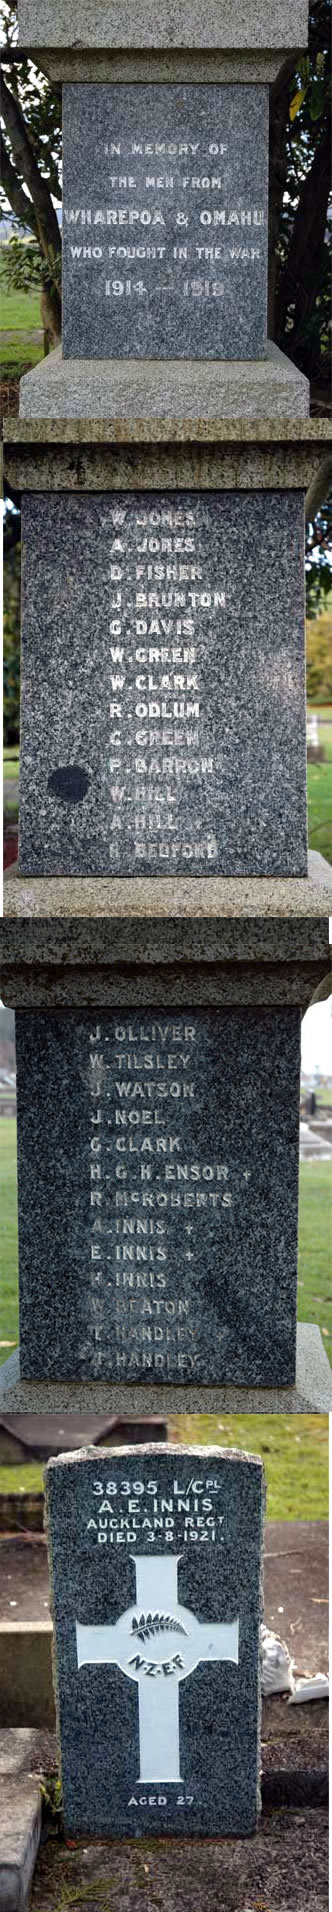 Omahu First World War memorial showing names